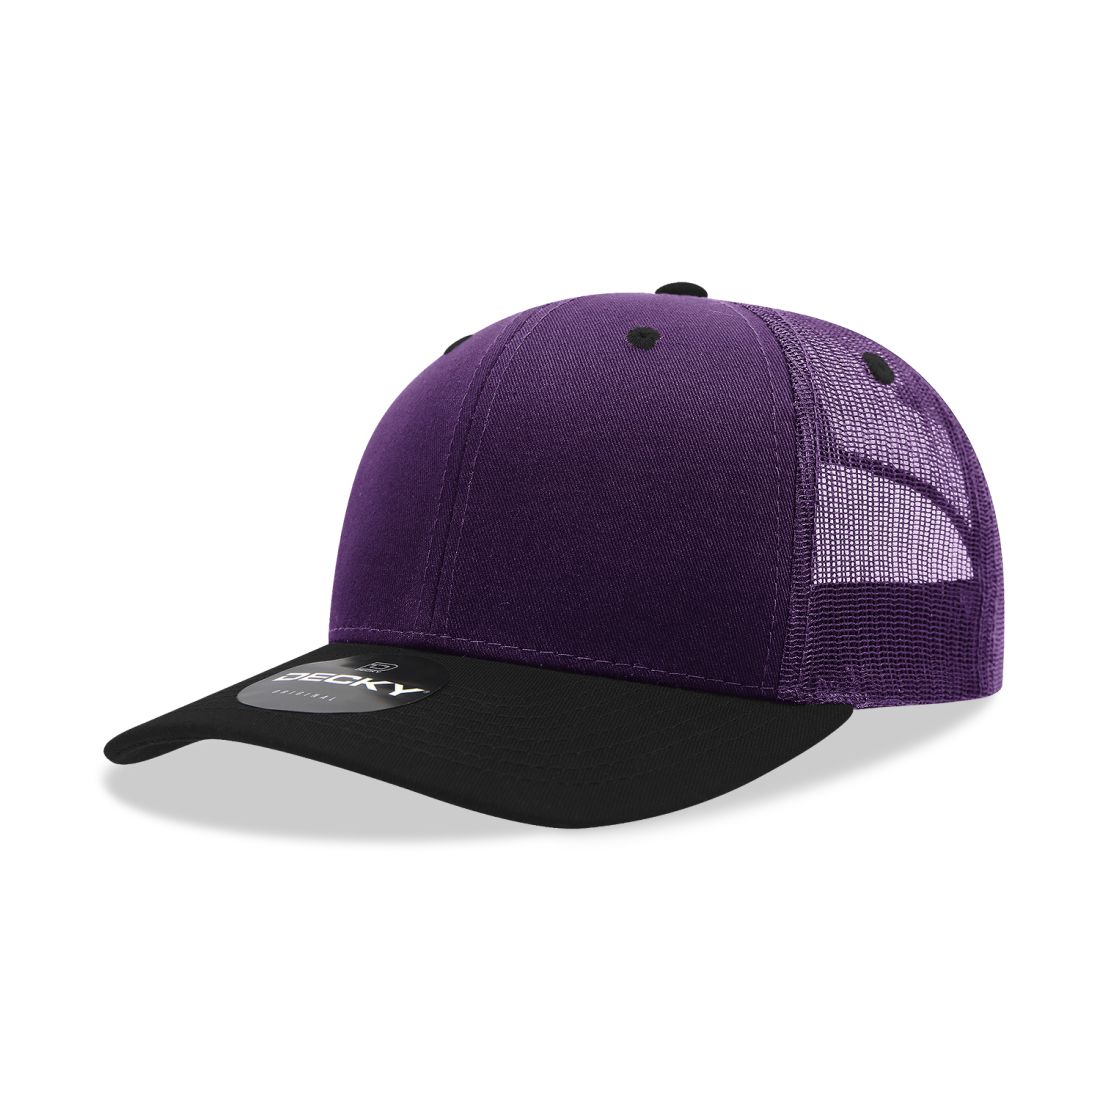 Purple/Black color variant